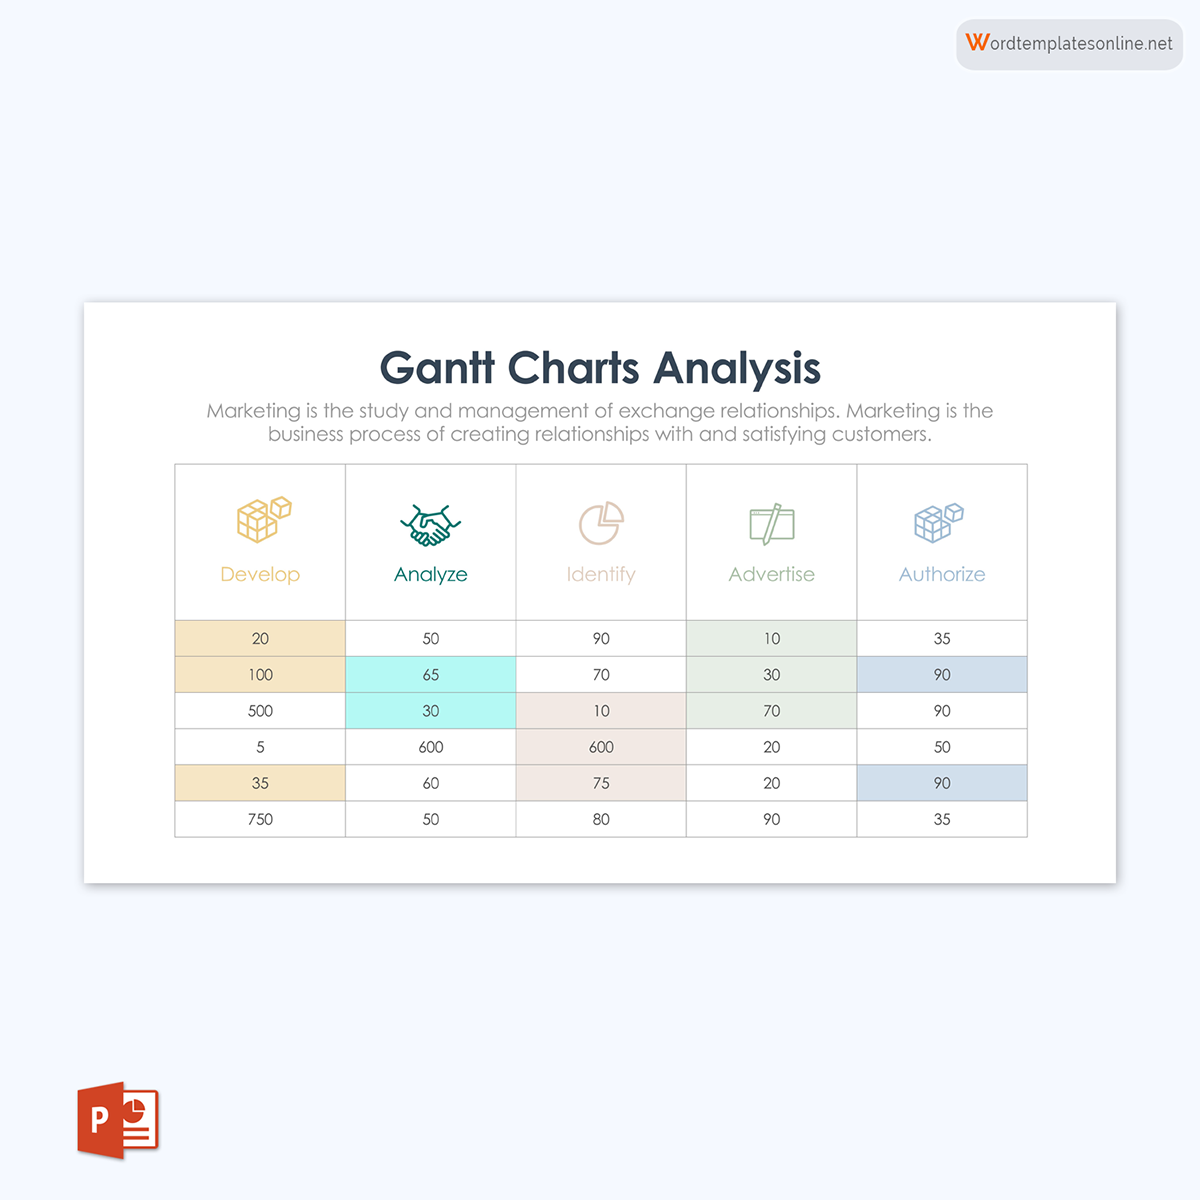 Professional Editable Gantt Chart Analysis Template 09 as PowerPoint Slides